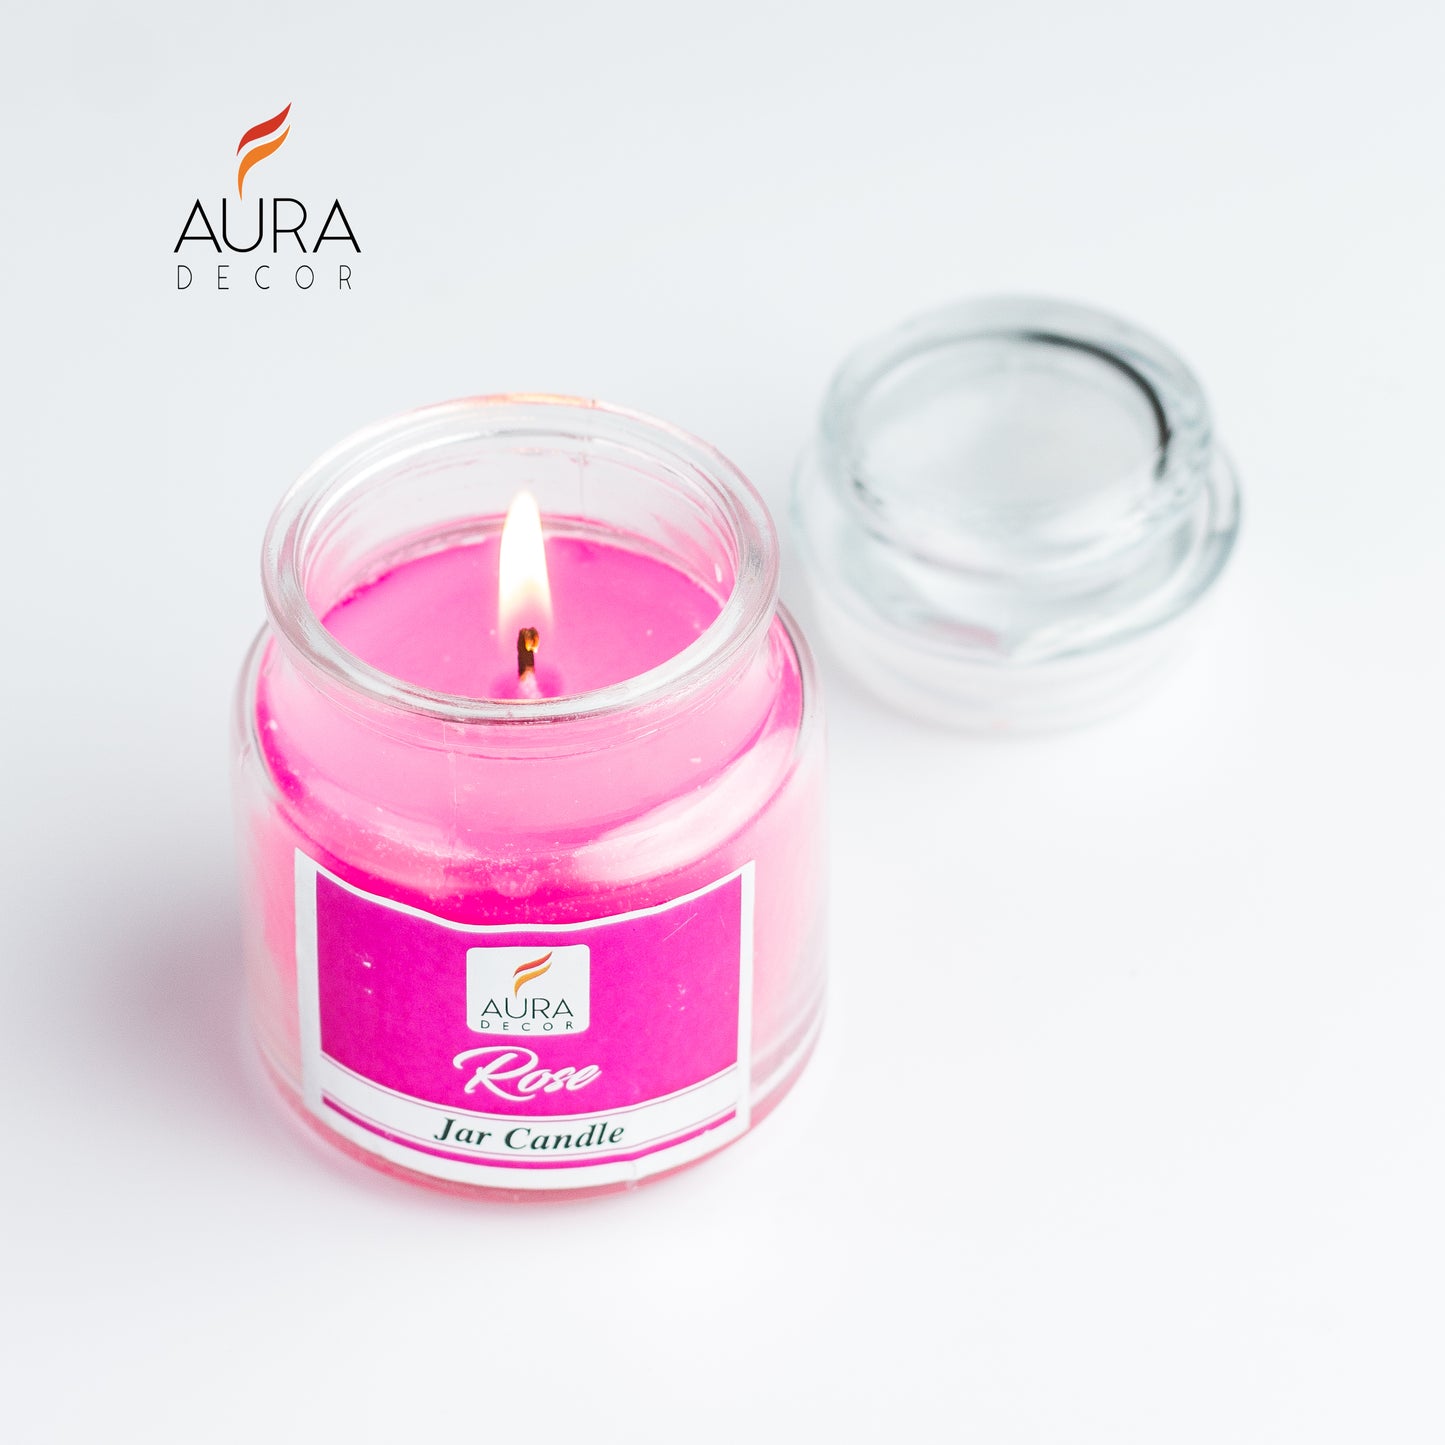 AuraDecor Buy 1 Get 1 Free Jar Candle ( Rose ) Burning Time 30 hours Each